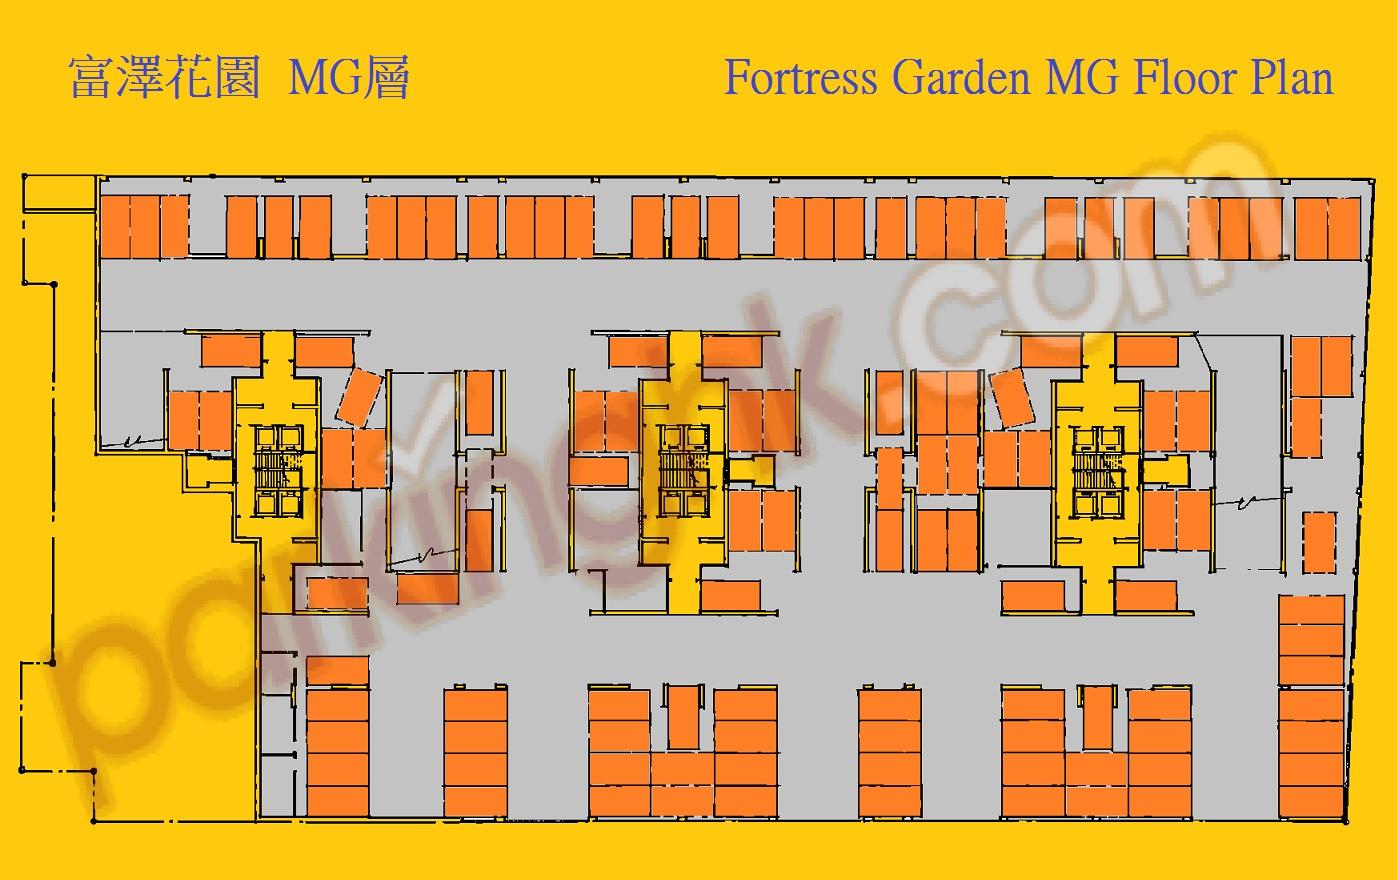  North Point Carpark  Fortress Hill Road  Fortress Garden  Floor plan 香港車位.com ParkingHK.com